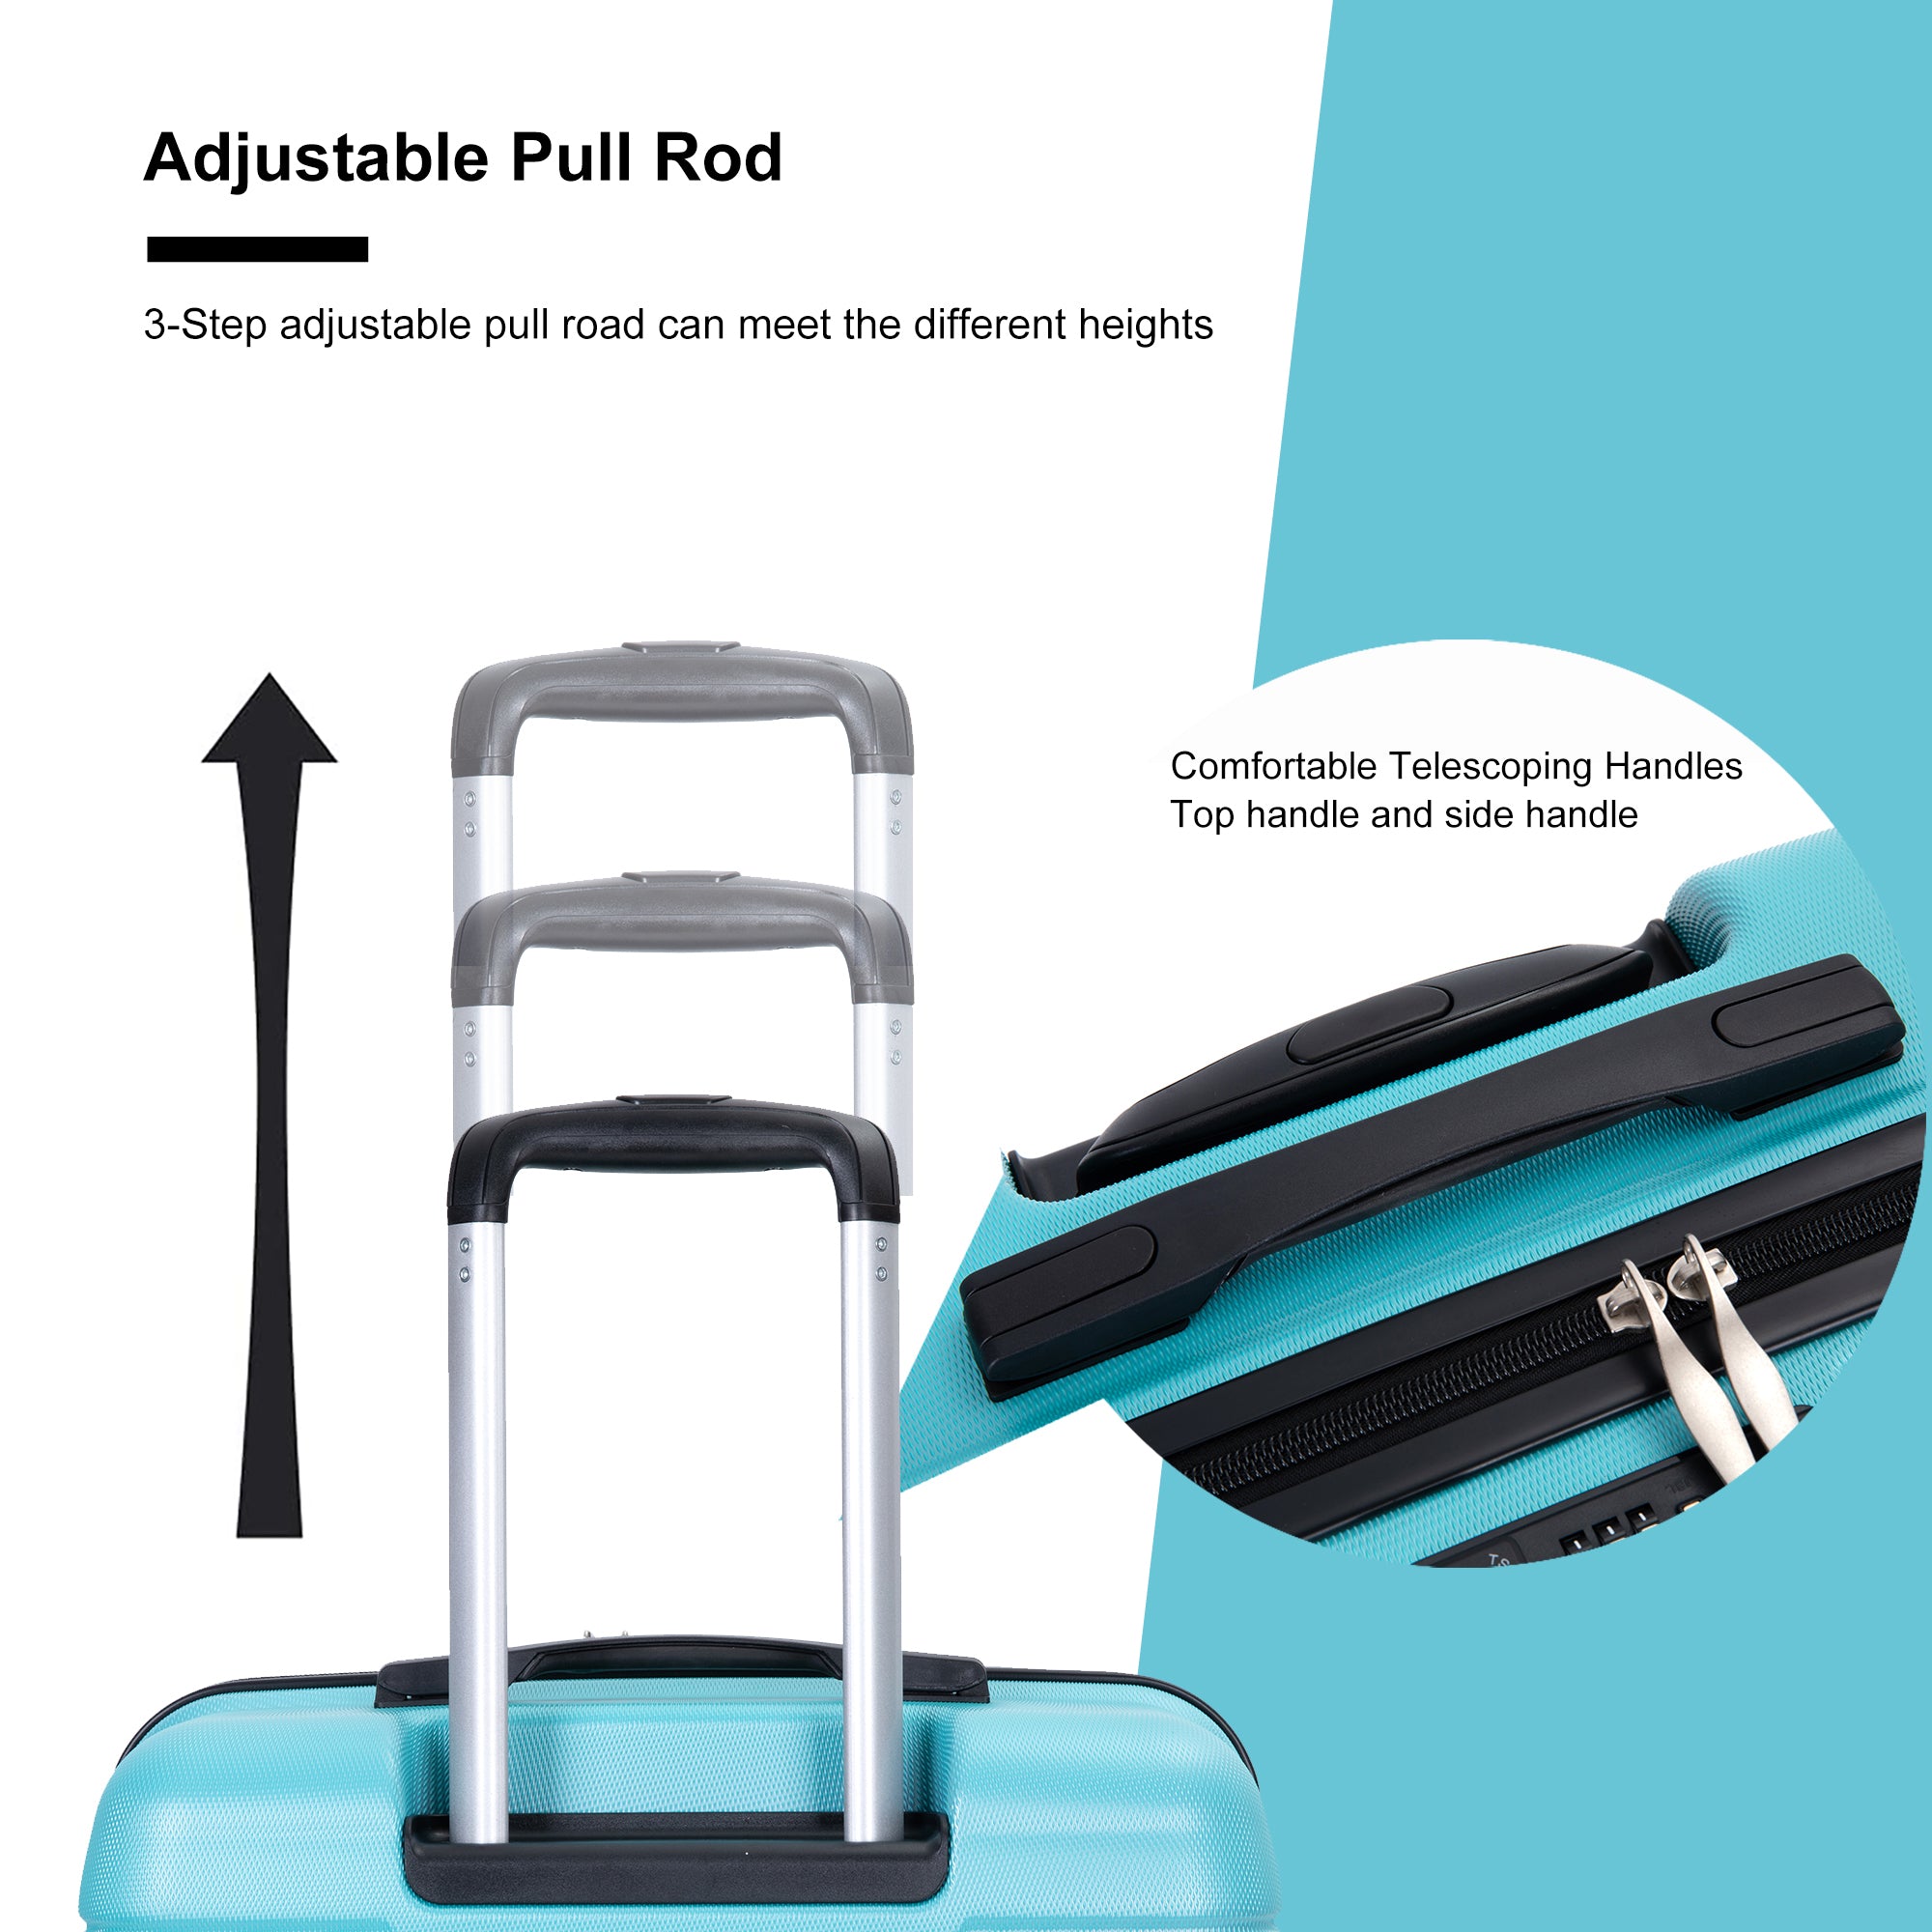 Expandable 3 Piece Luggage Sets PC Lightweight & aqua blue-pc